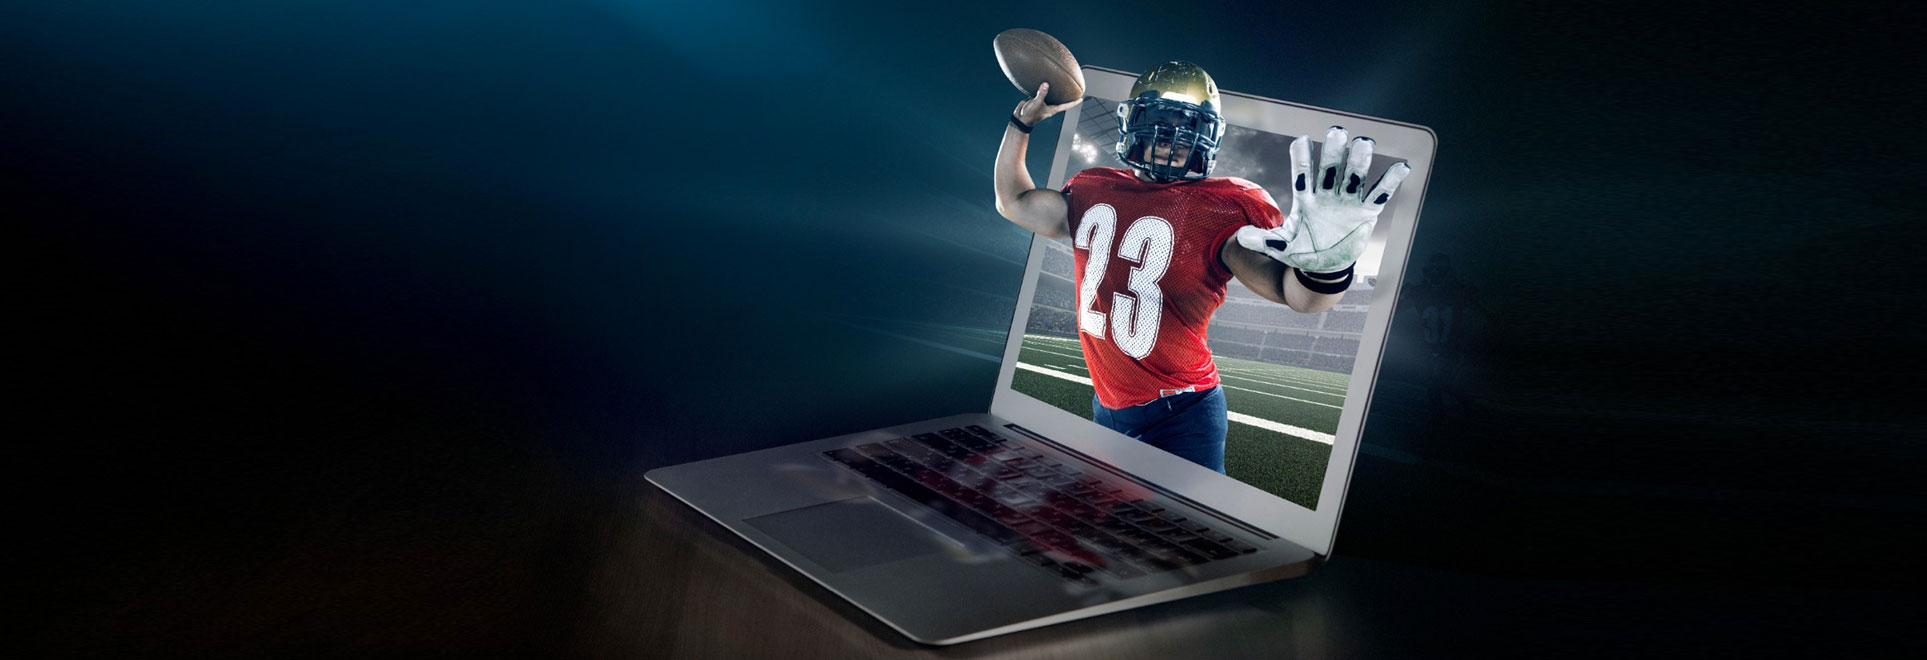 Play Virtual Sports at Bodog during Super Bowl betting!